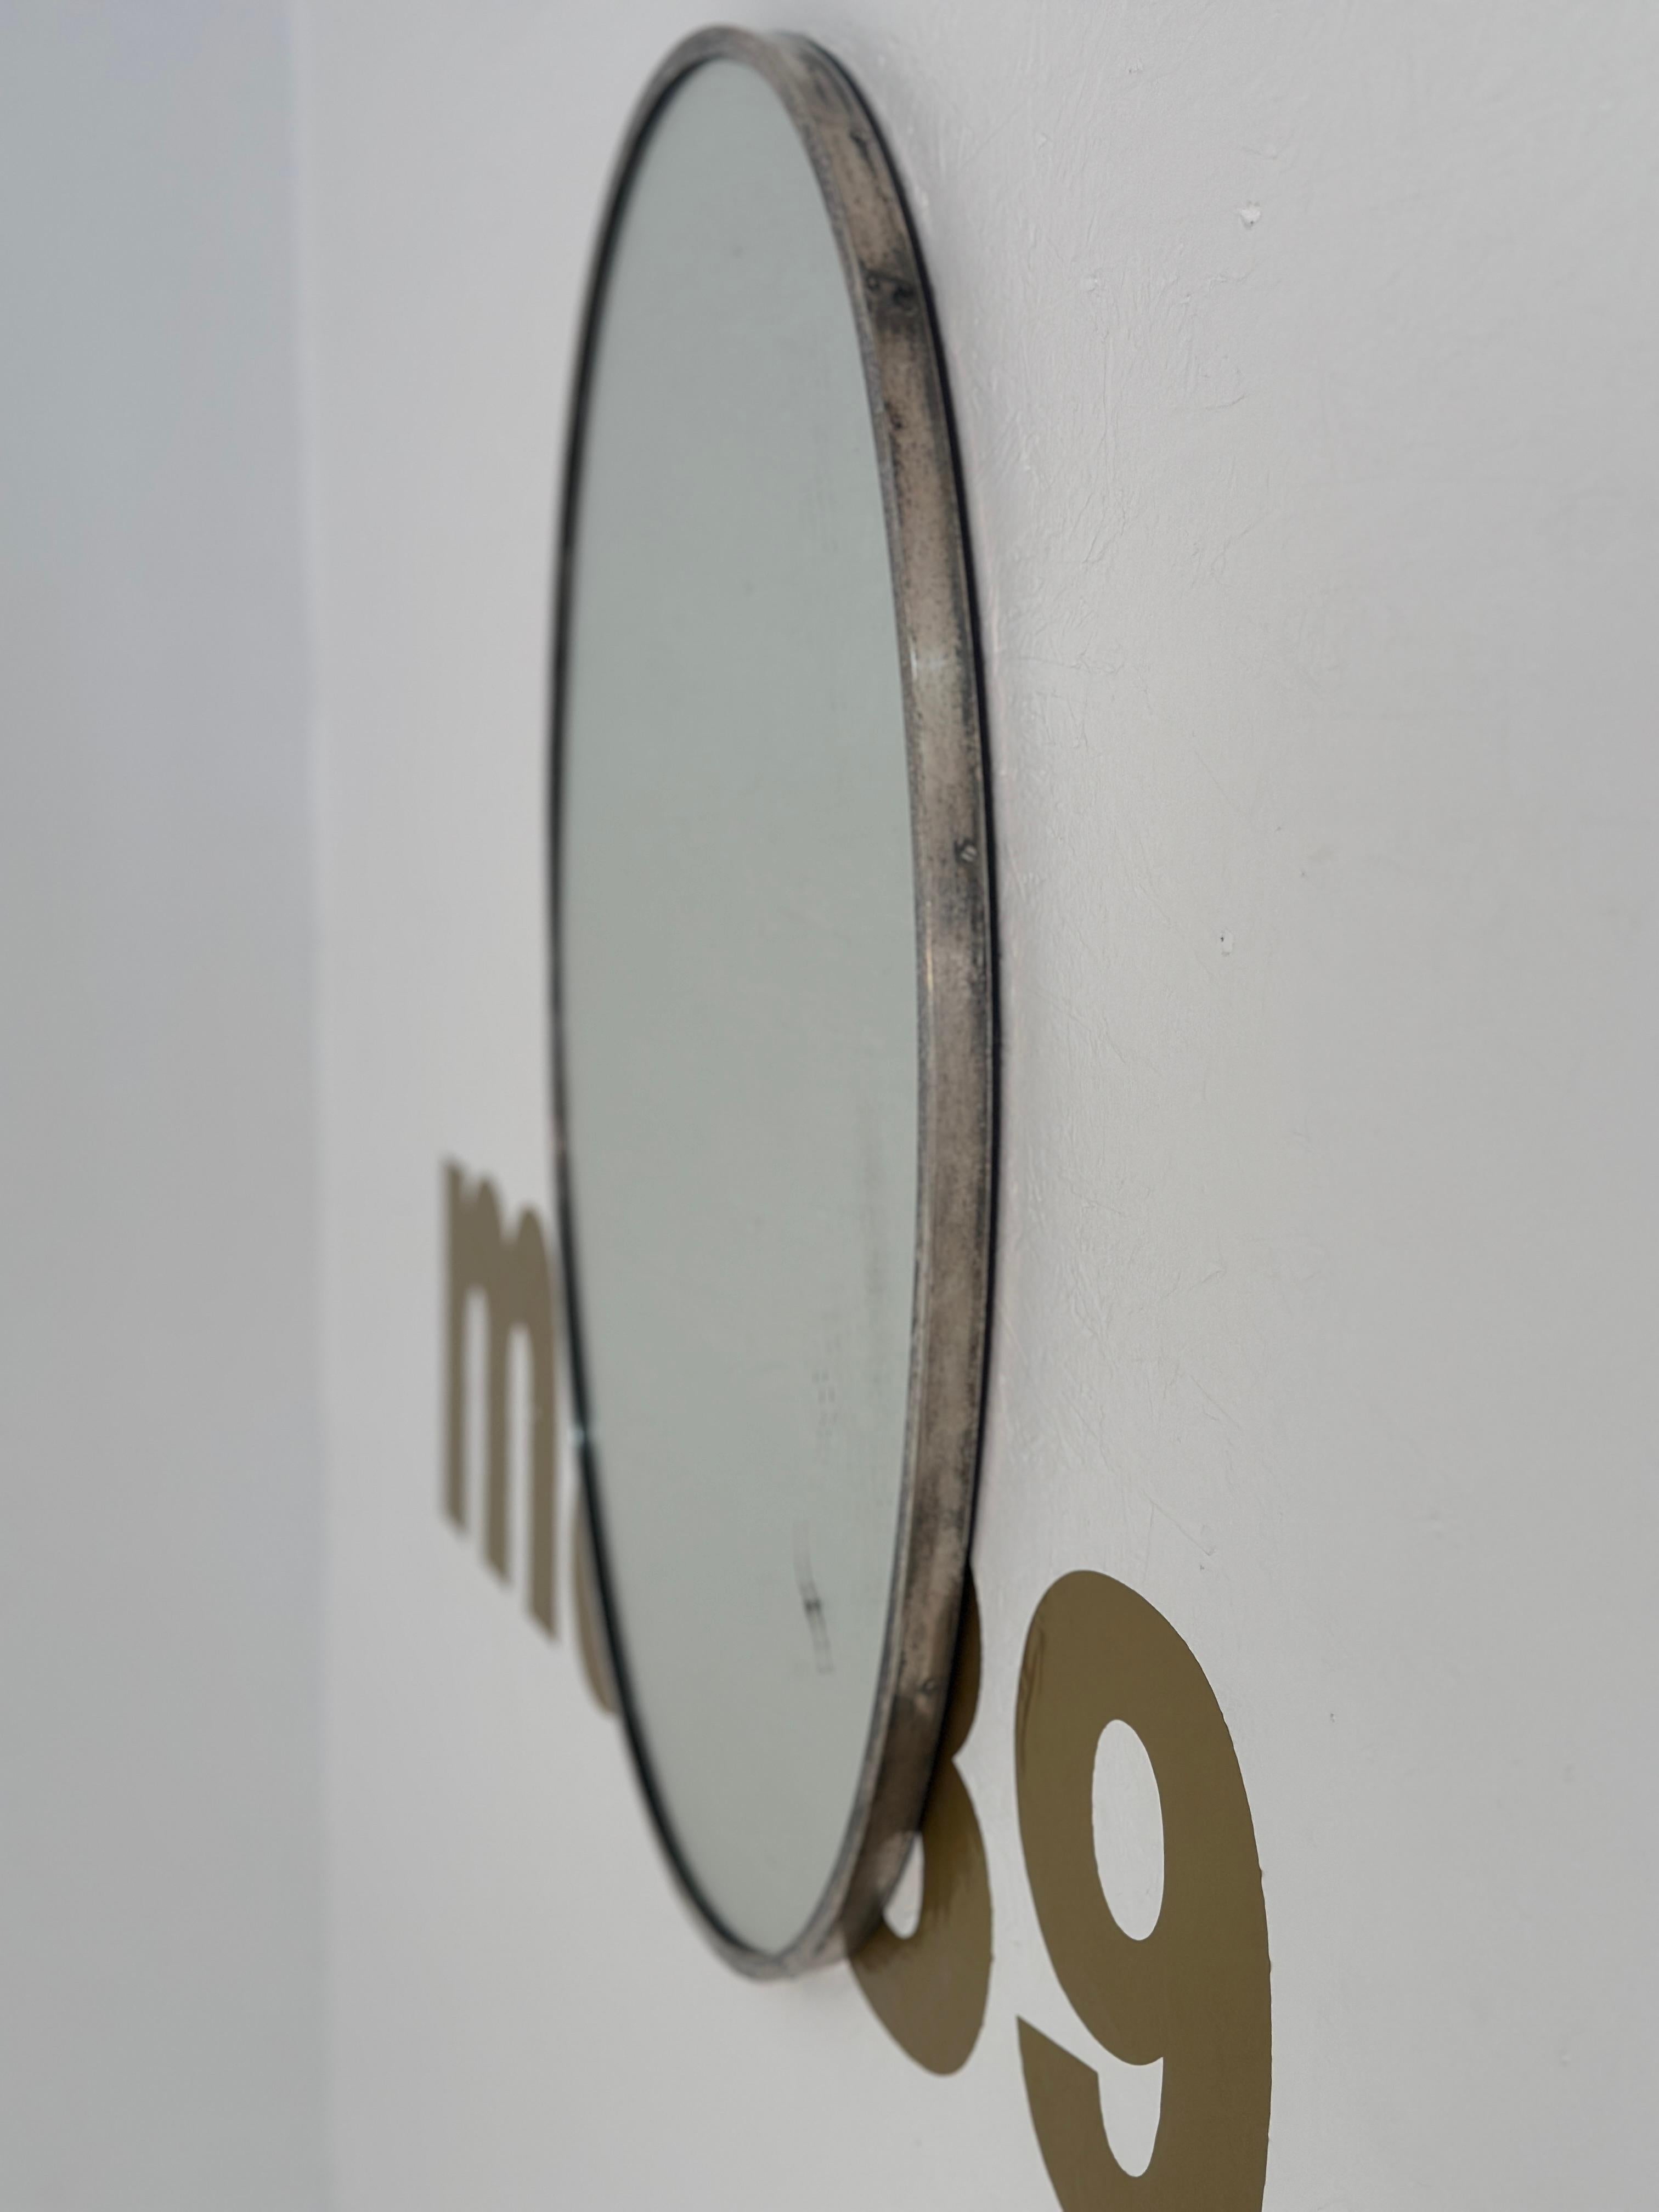 Vintage Italian decorative brass wall mirror.

